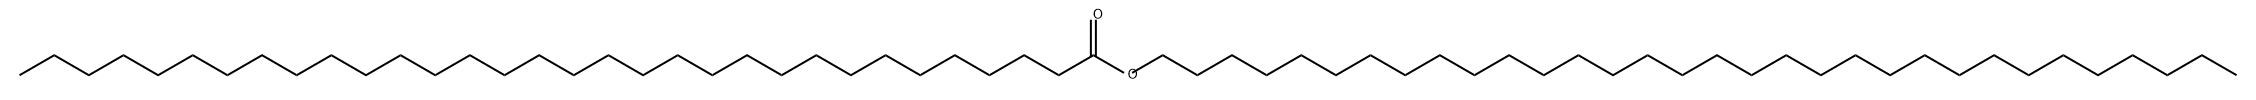 Dotriacontanoic acid dotriacontyl ester Structure